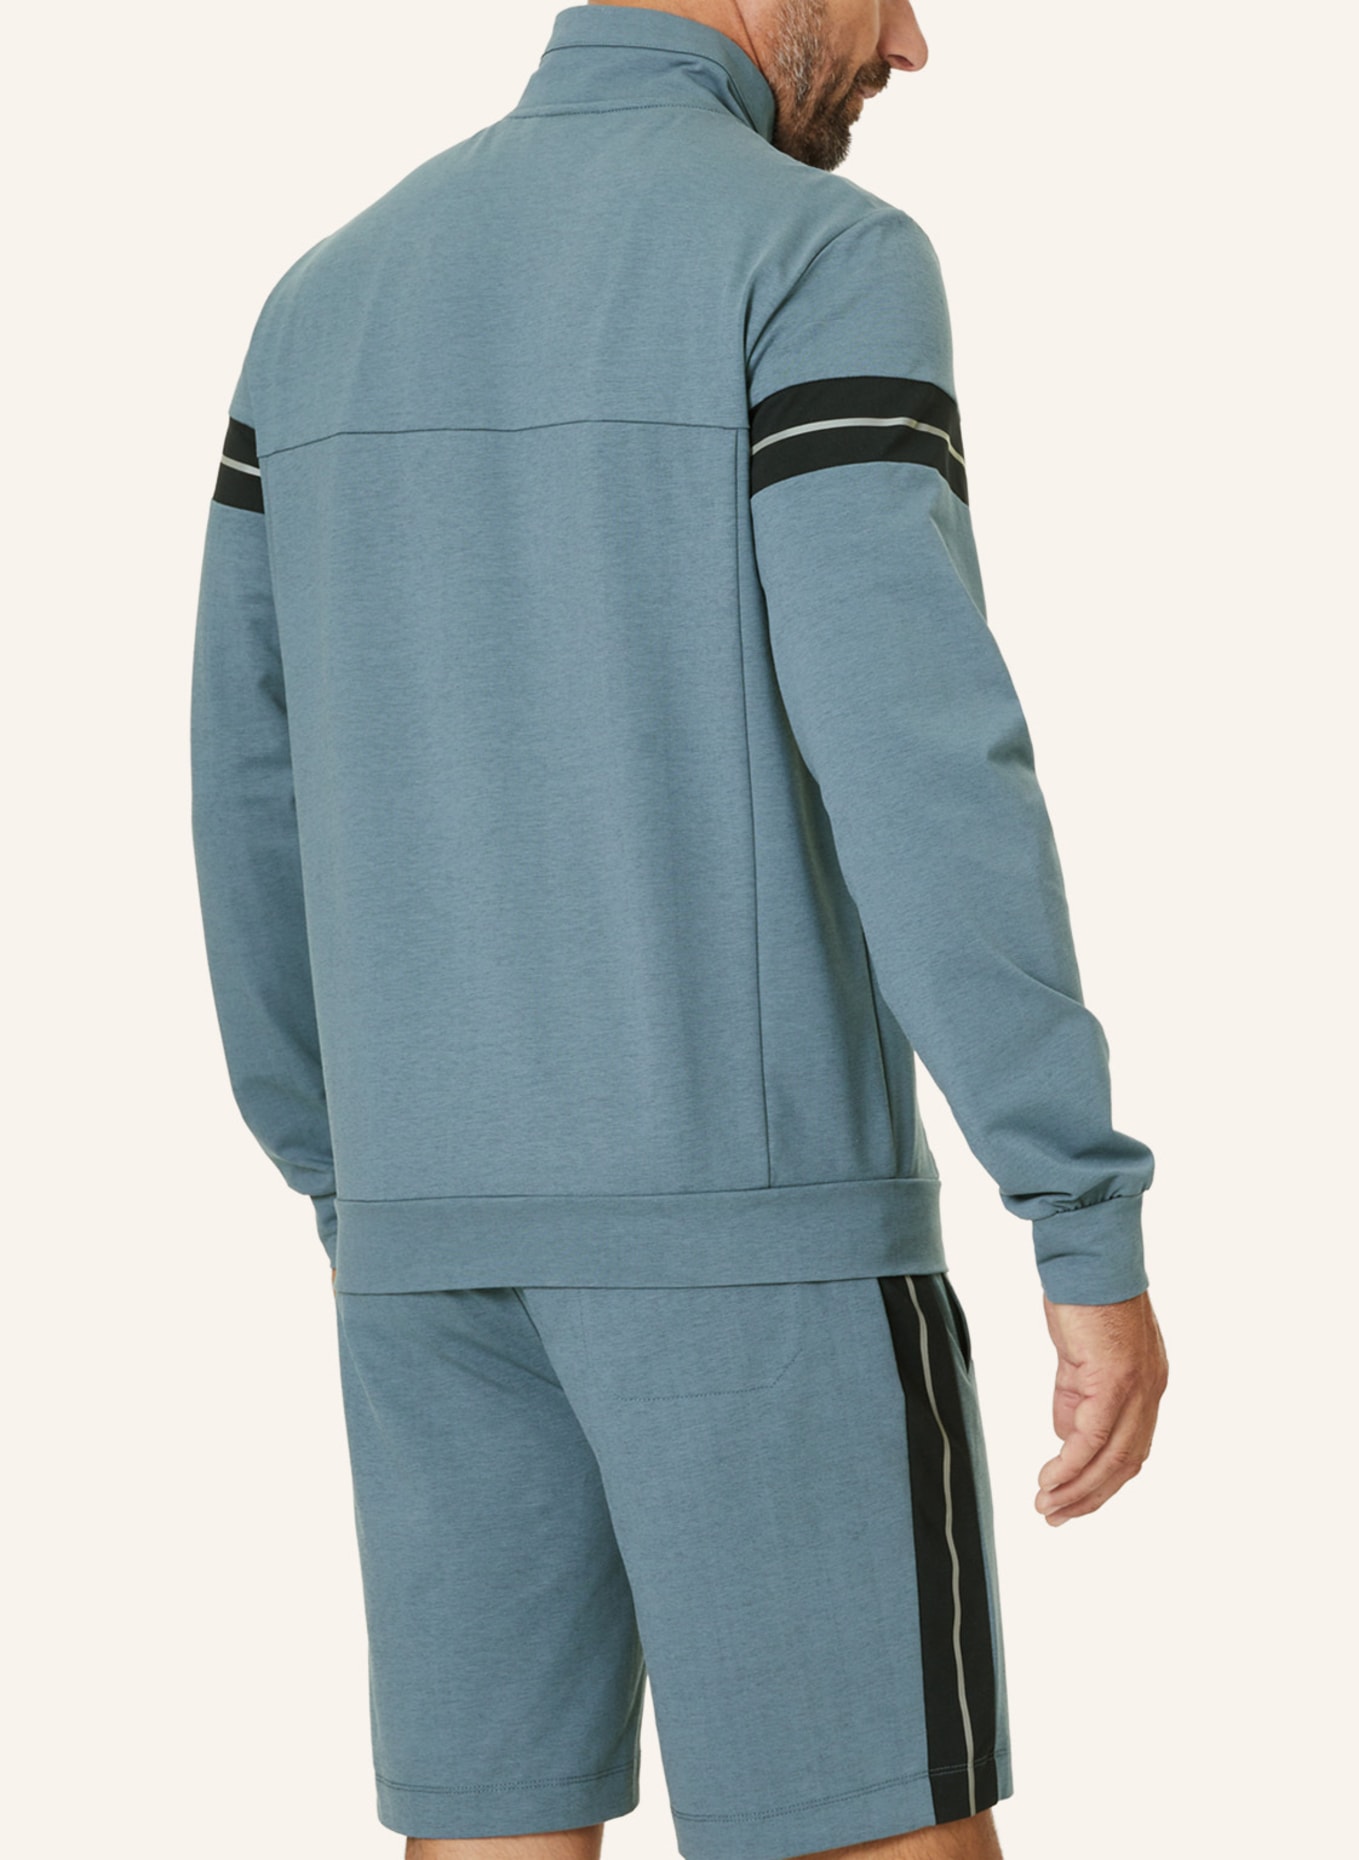 JOY sportswear Jacke BENJAMIN, Farbe: GRAU (Bild 2)